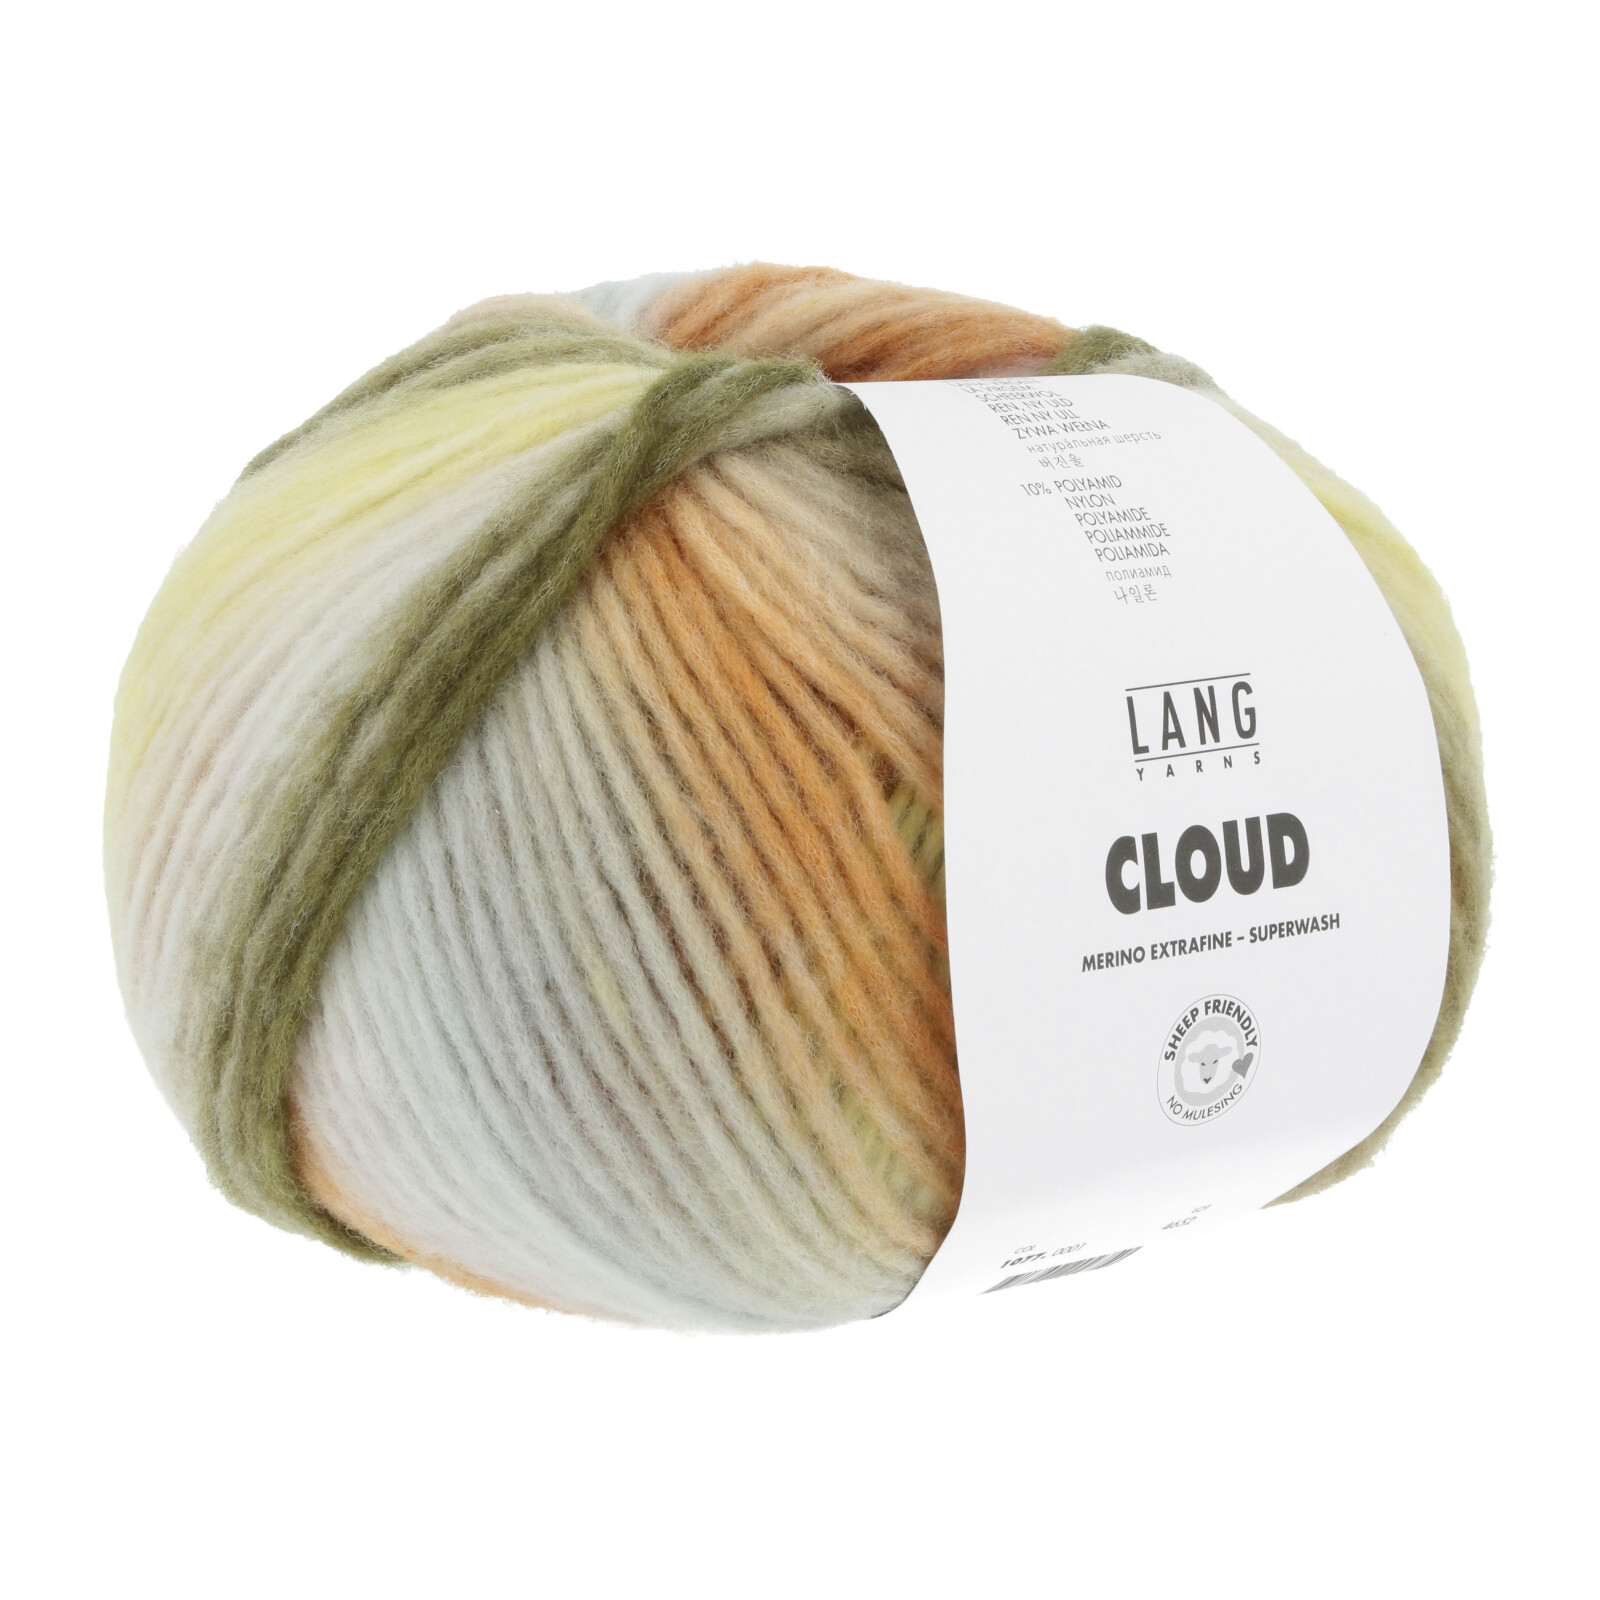 LANG Cloud 001 laiton/bleu clair/olive